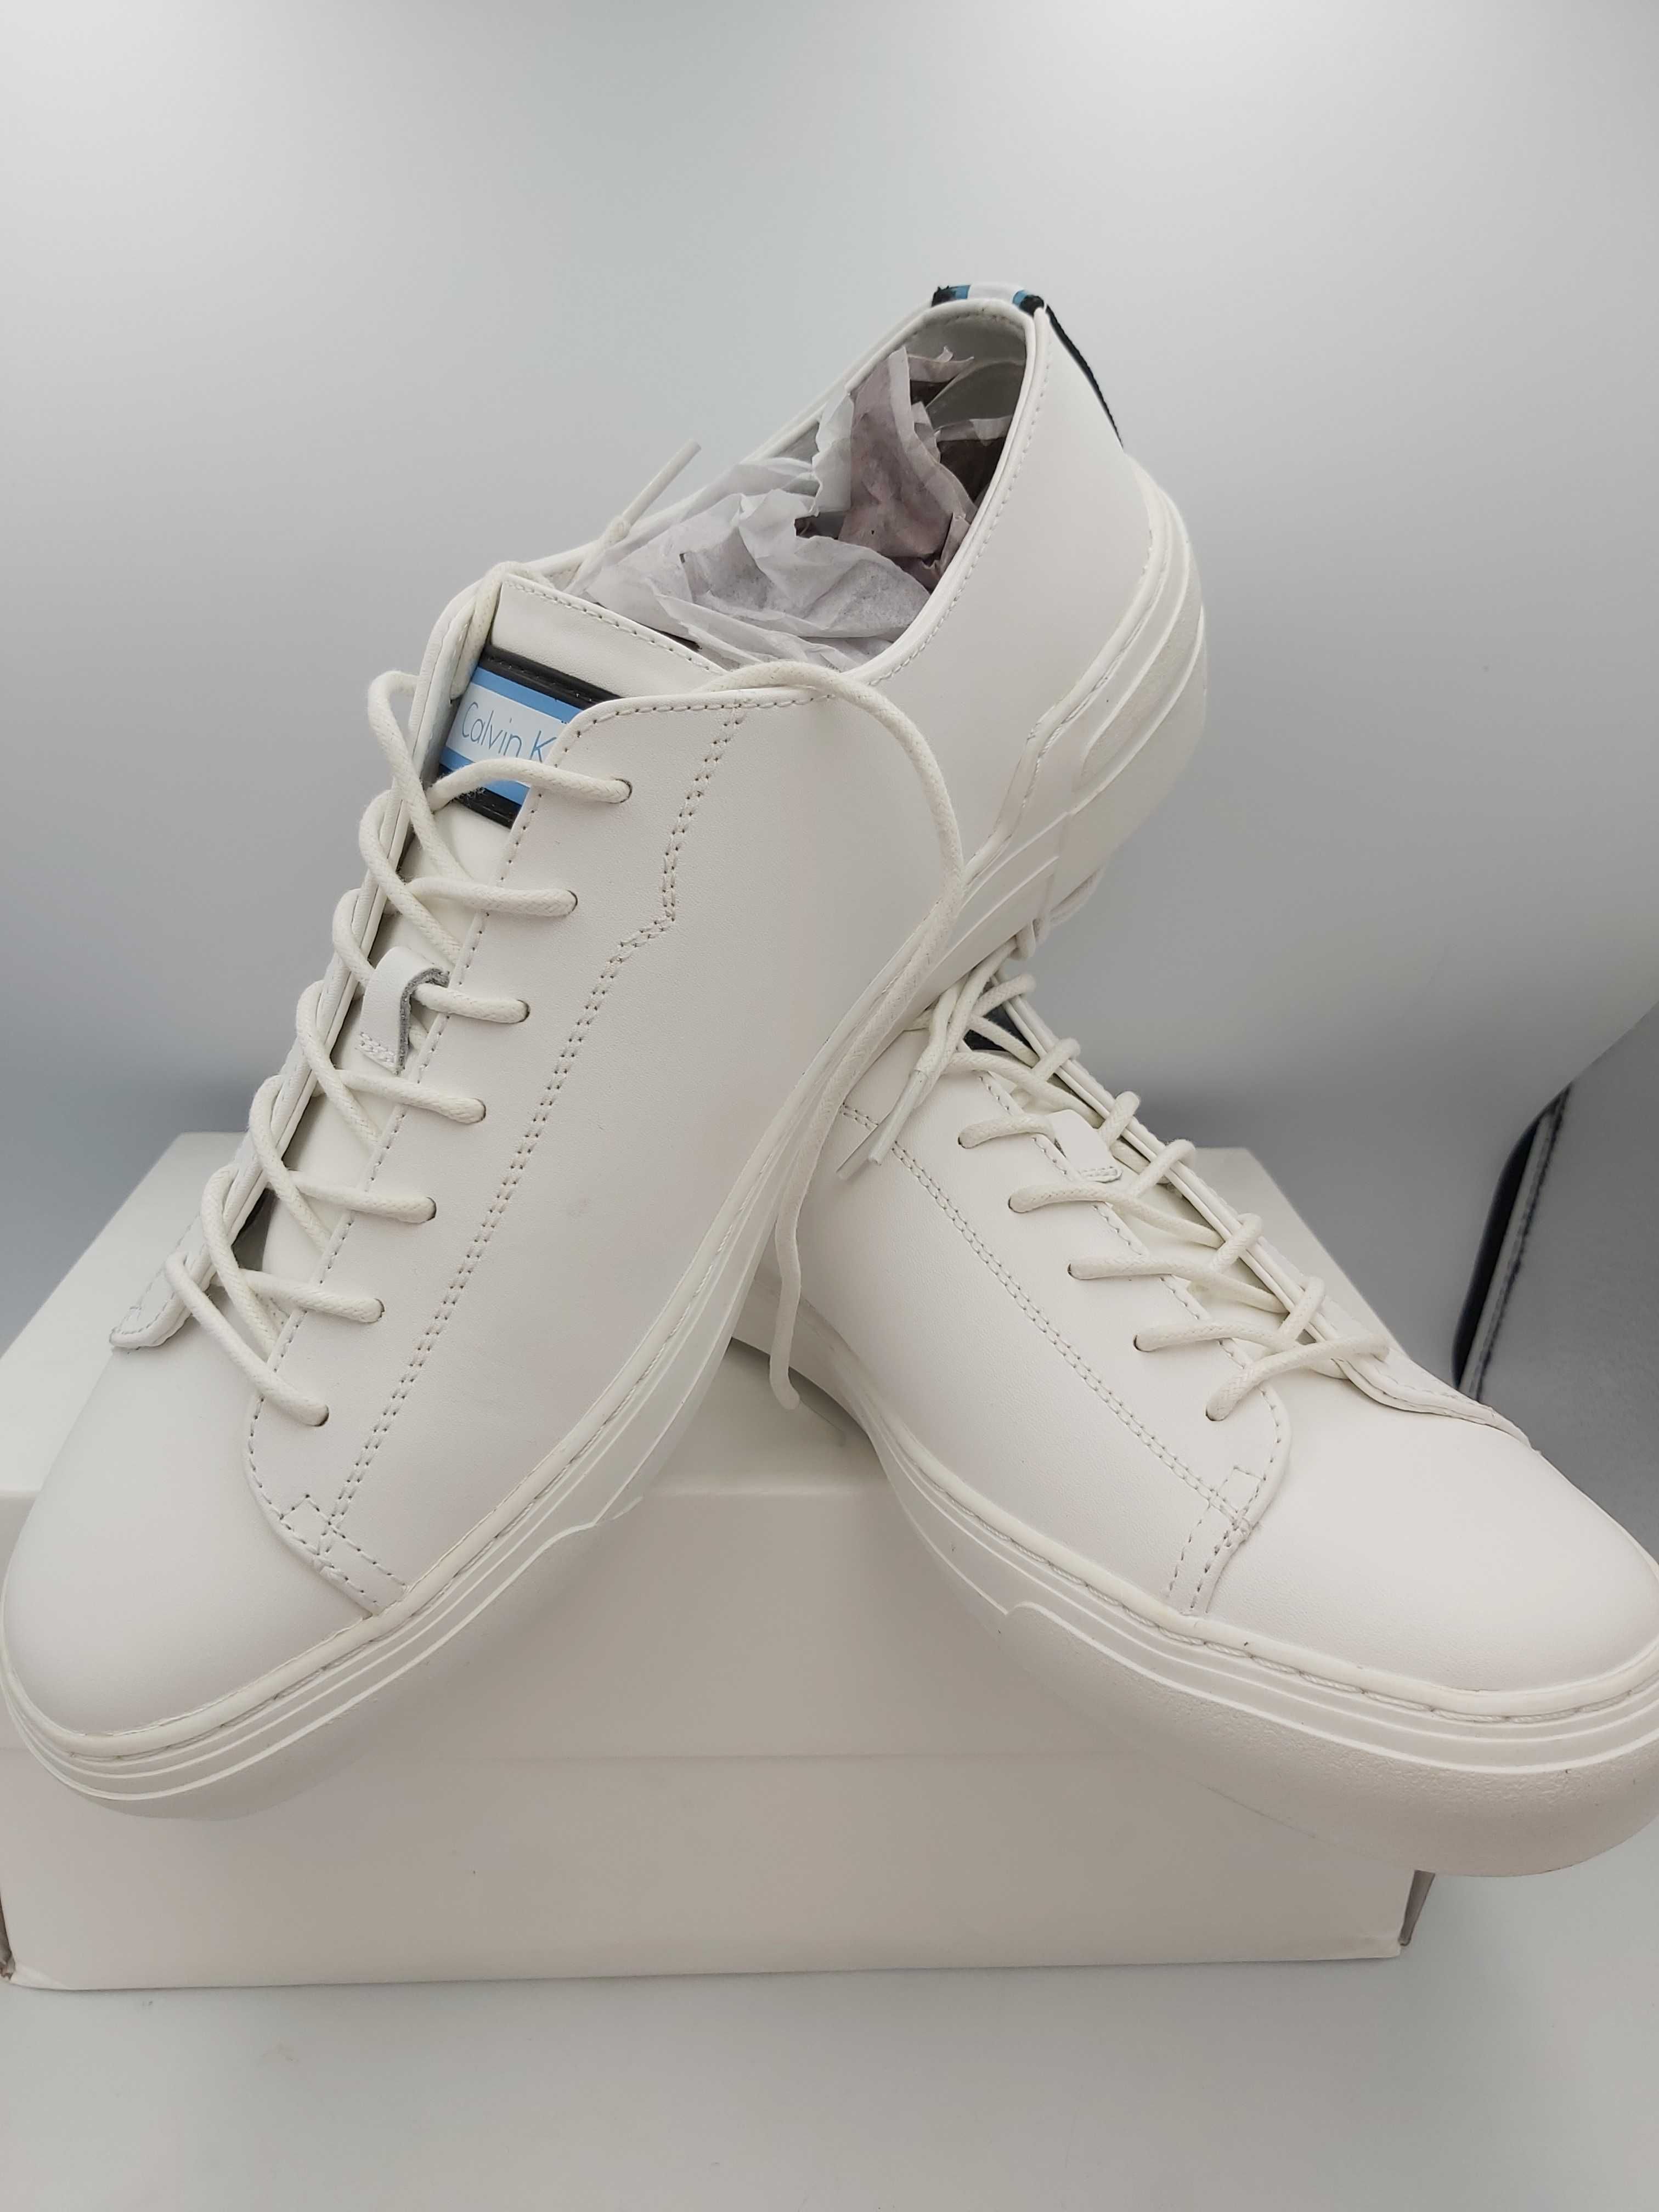 NOWE sneakersy CALVIN KLEIN octavian trampki białe rozmiar 43